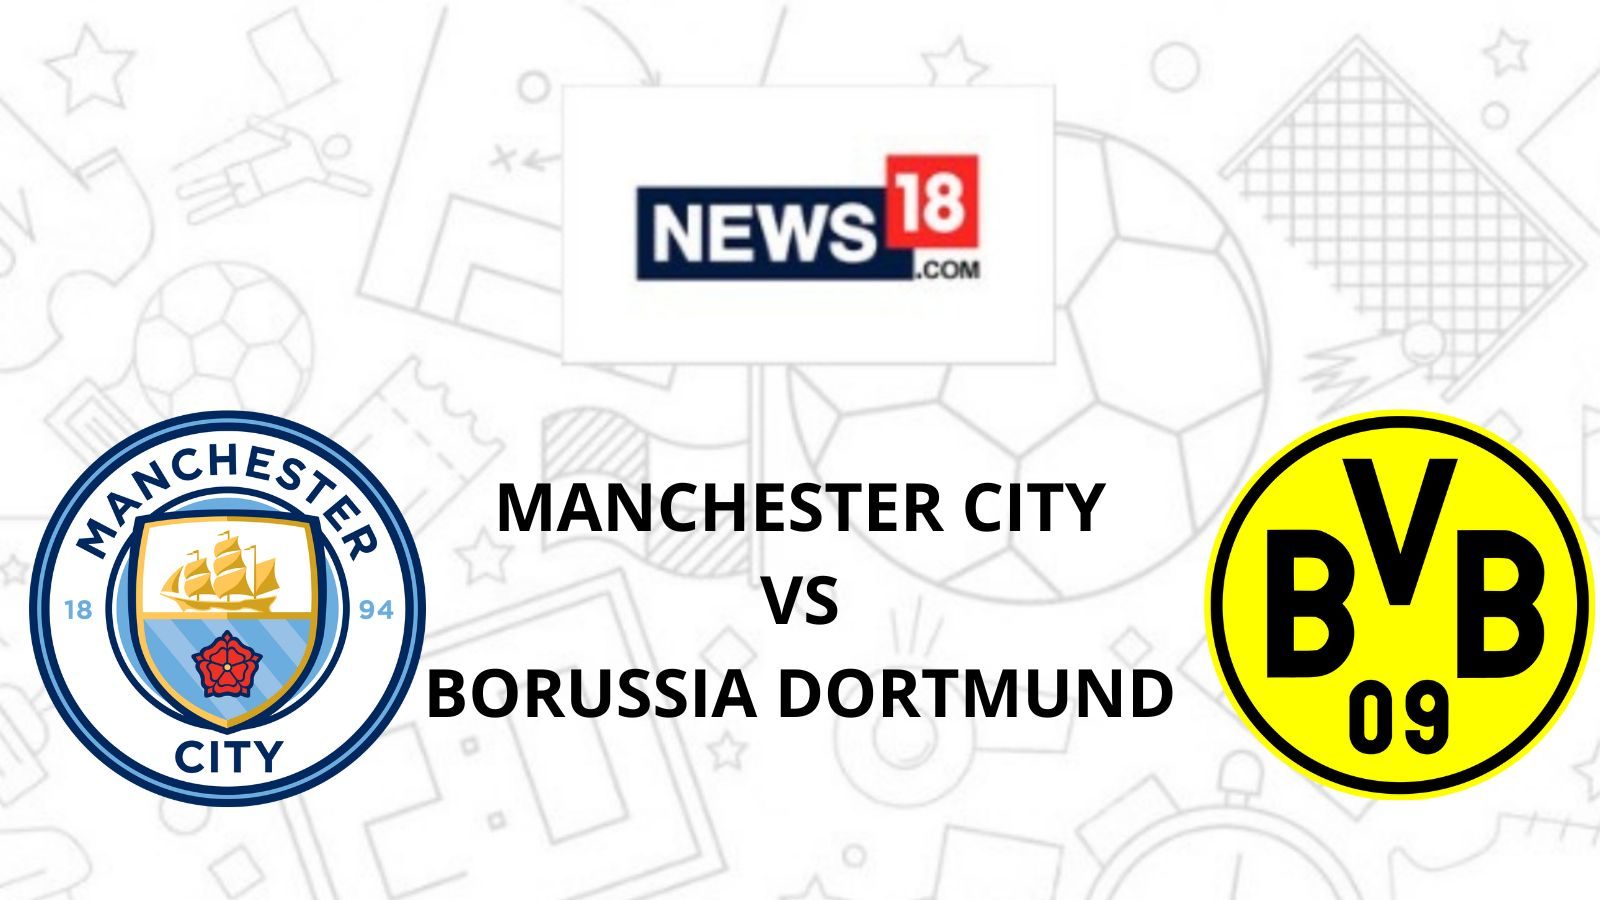 News Collector India | Manchester City vs Borussia Dortmund Live